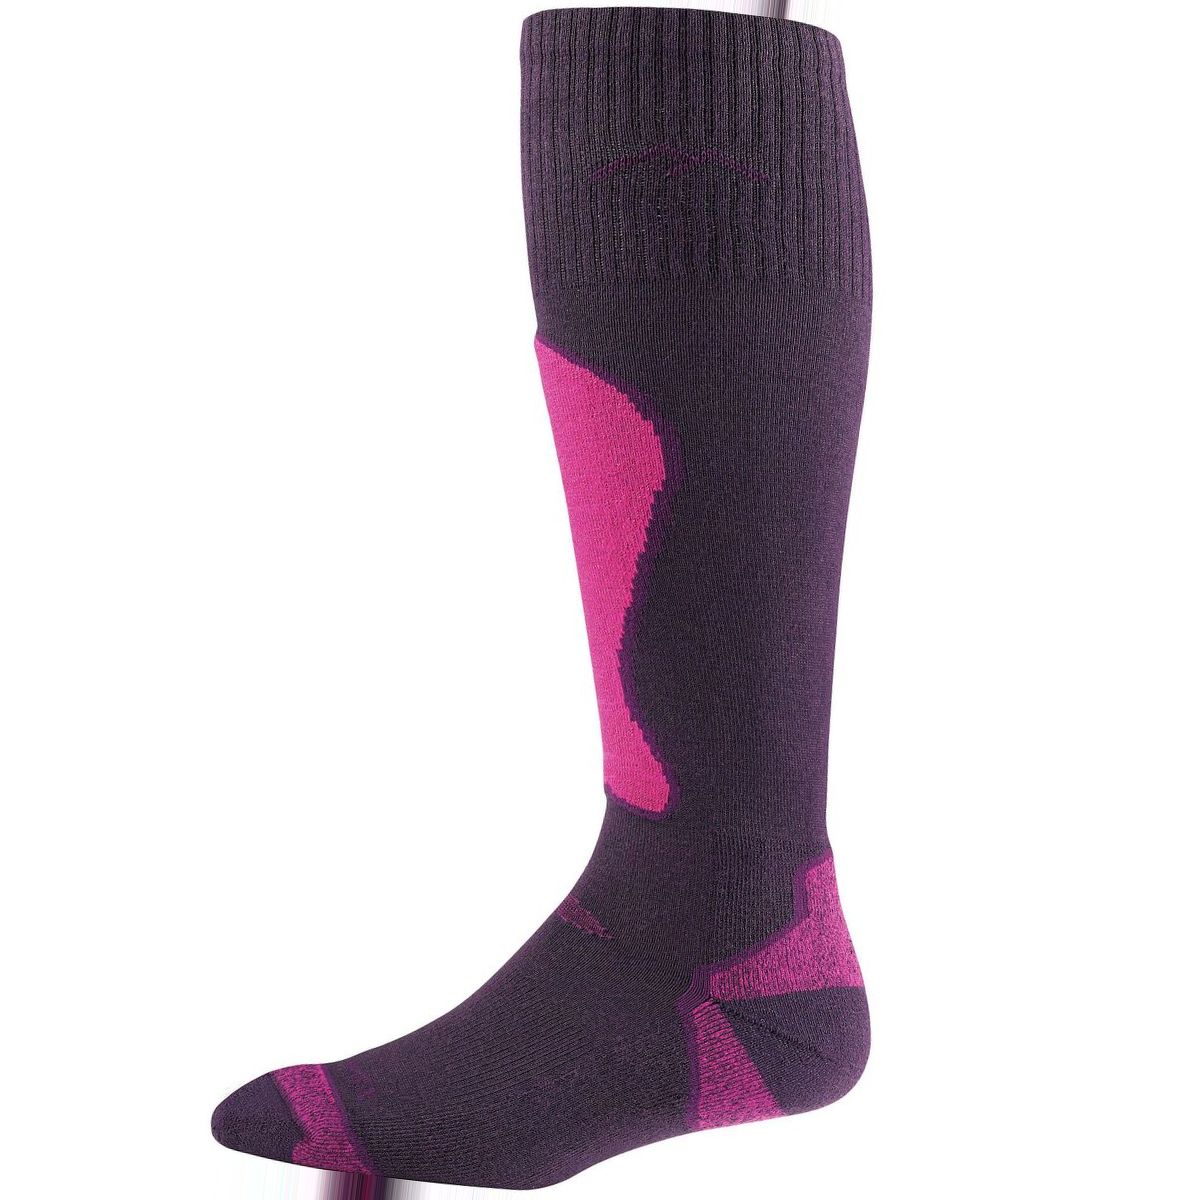 Darn Tough Thermolite OTC Padded Cushion Sock - Women's